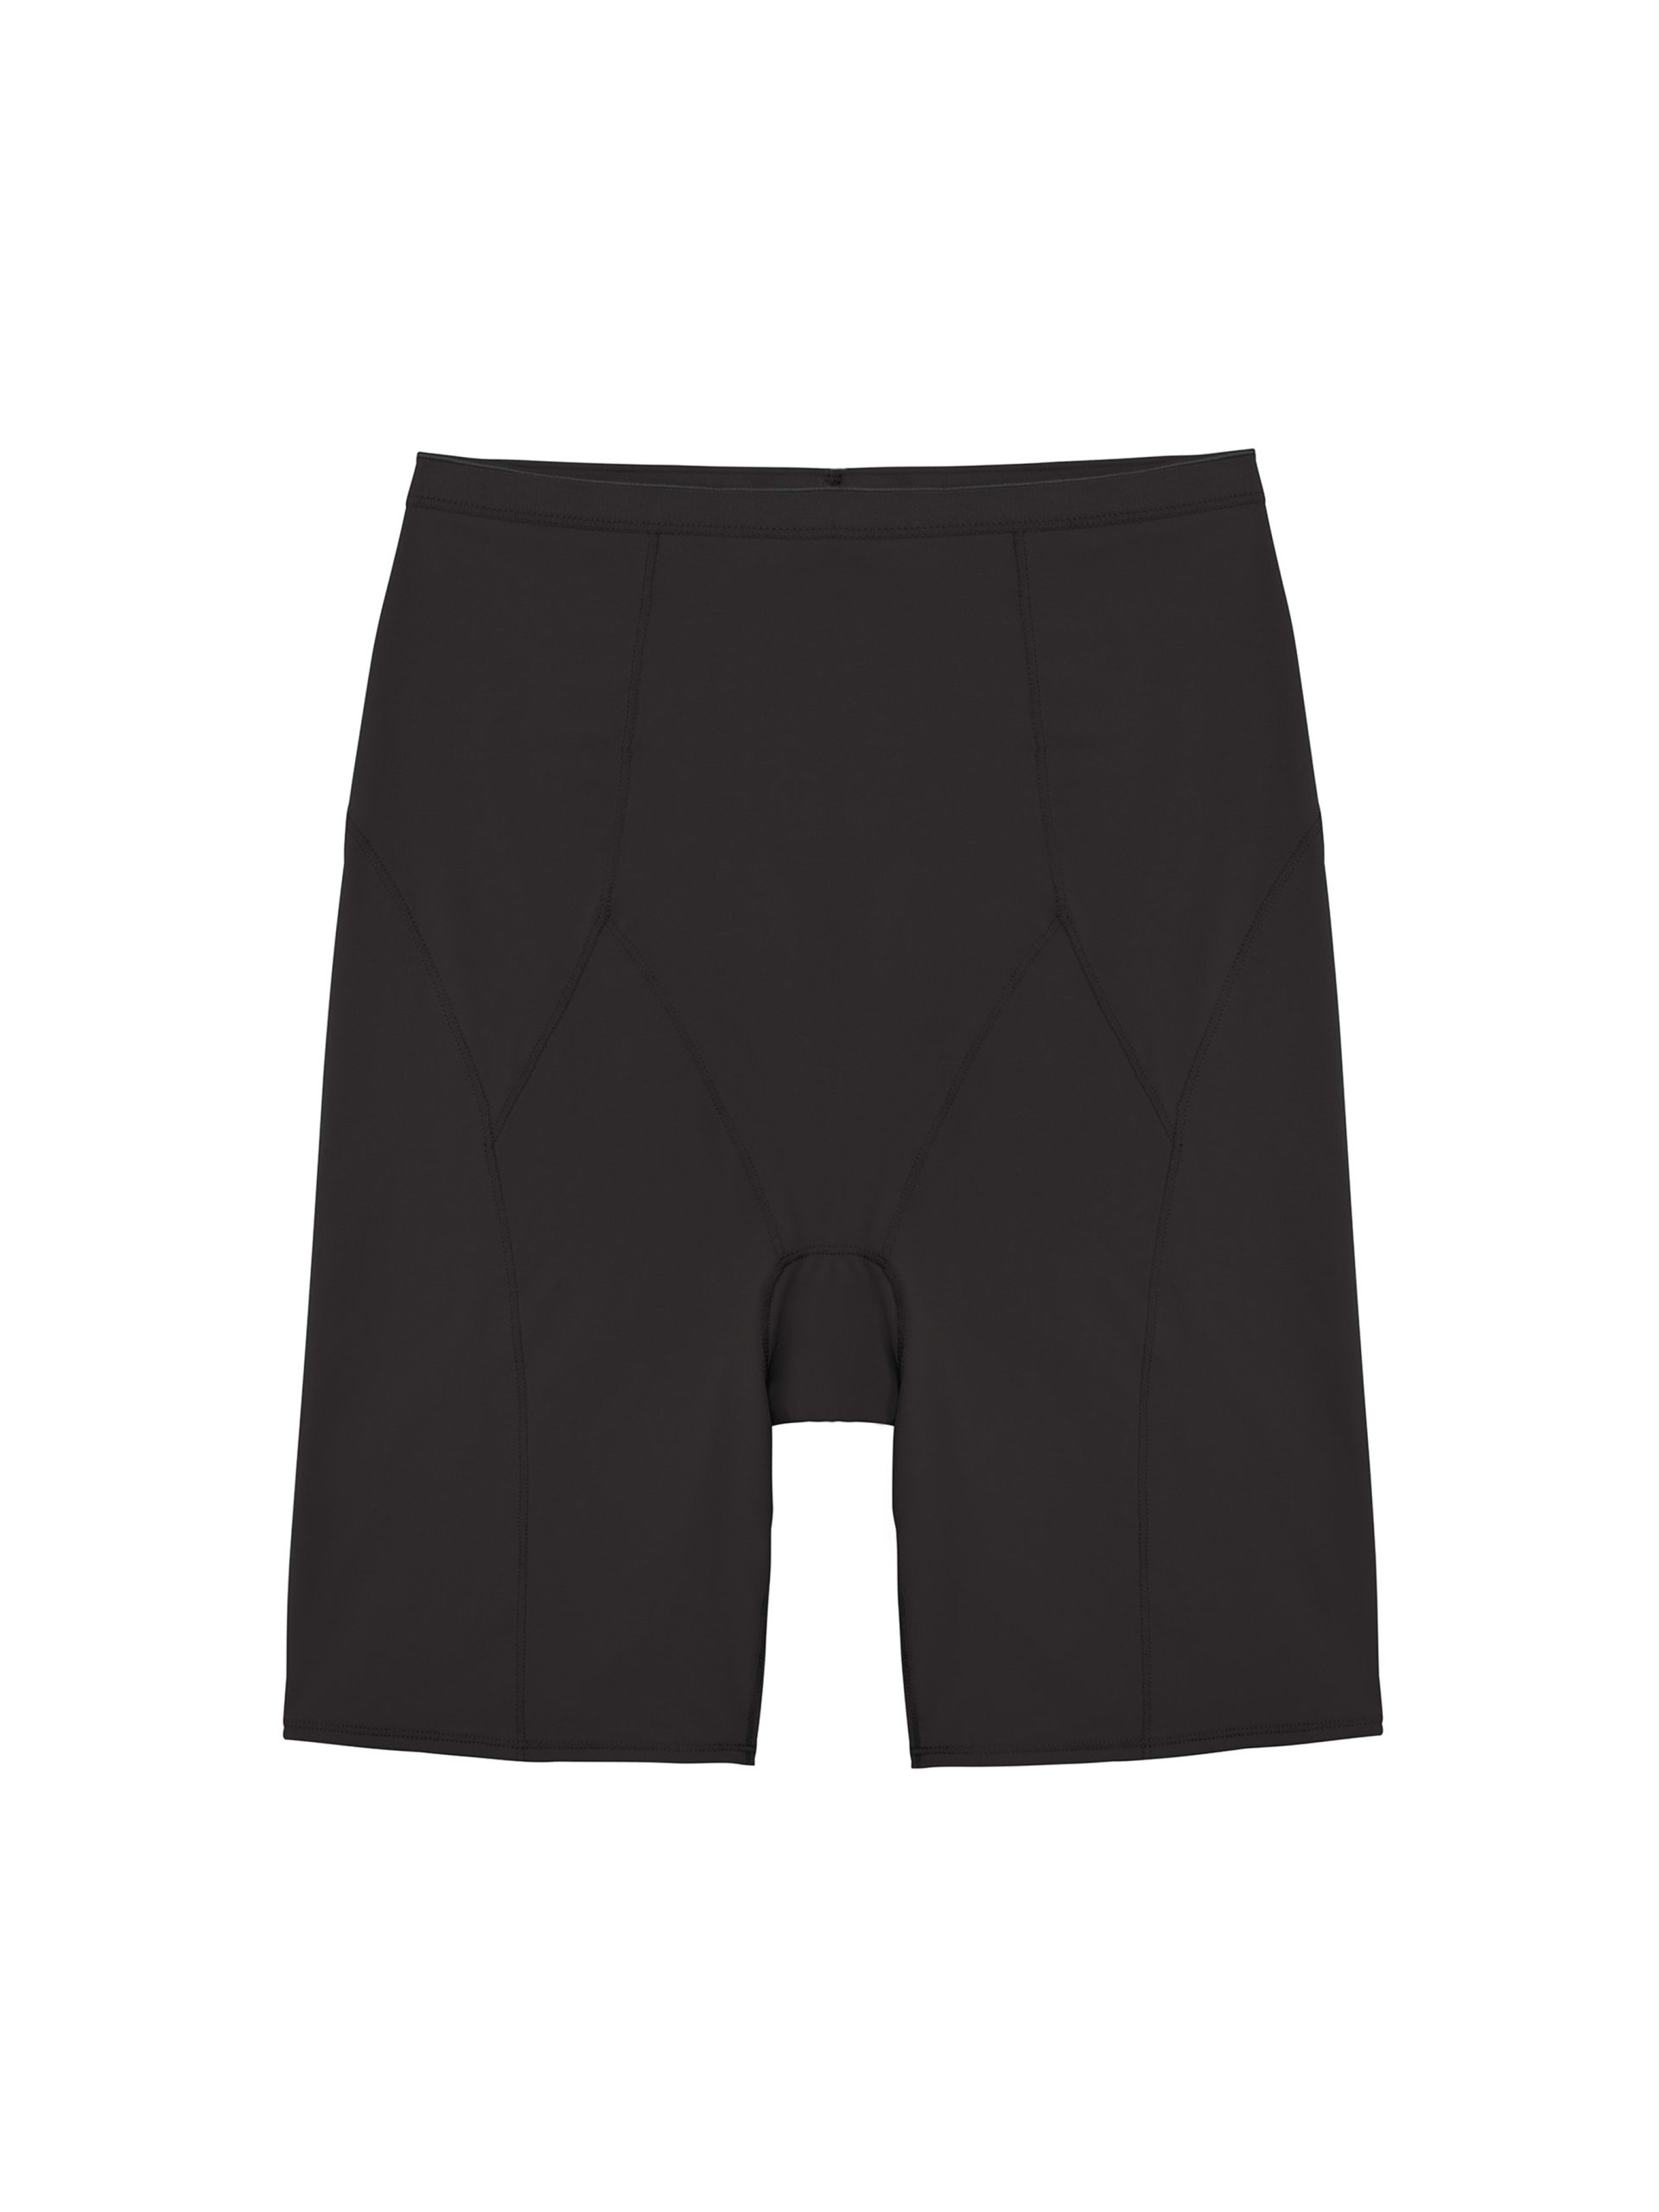 BUY - FIGUR BY JULES Ultimate Shaper Shorts - Black (Petite)